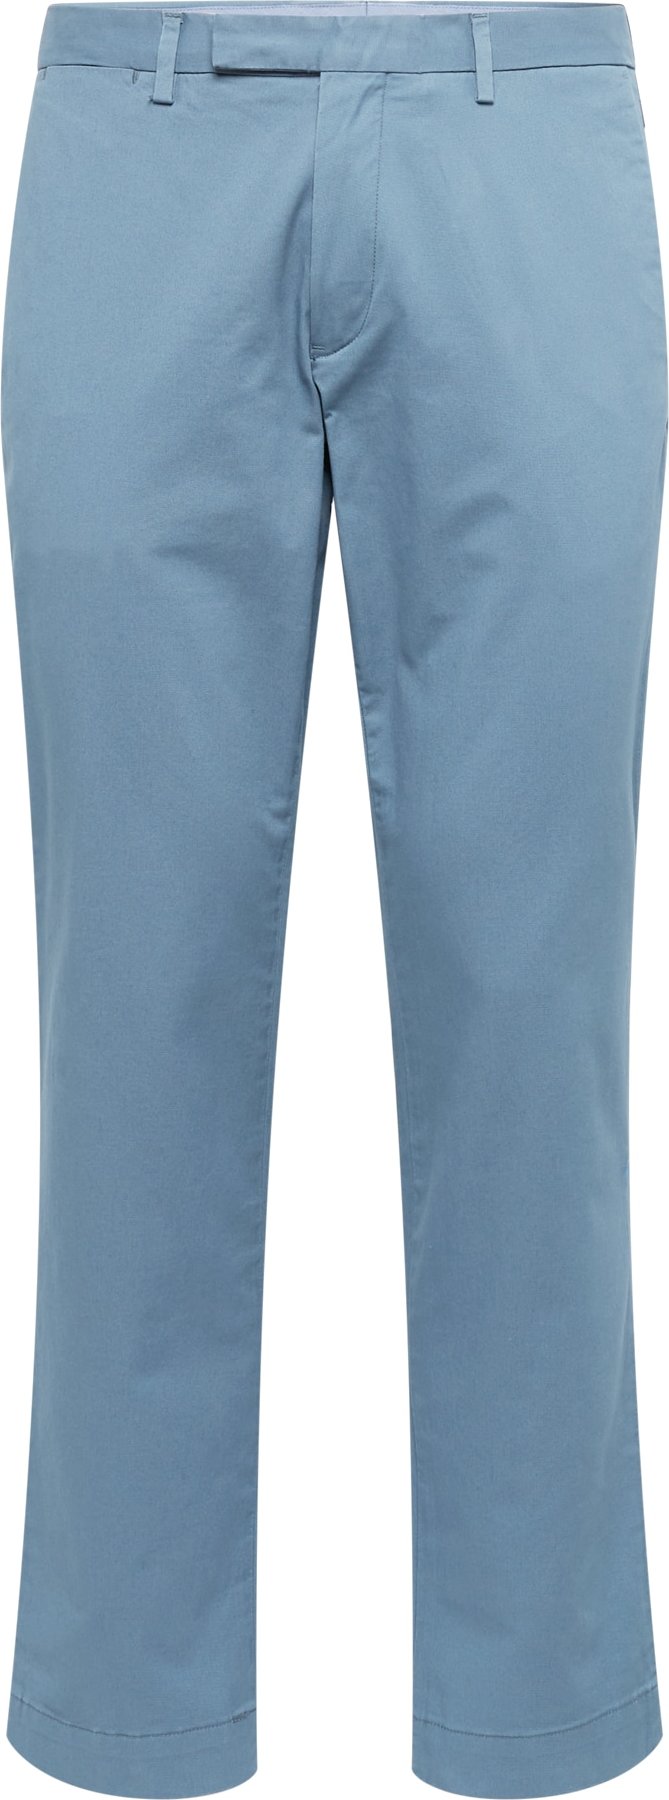 Chino kalhoty Polo Ralph Lauren světlemodrá